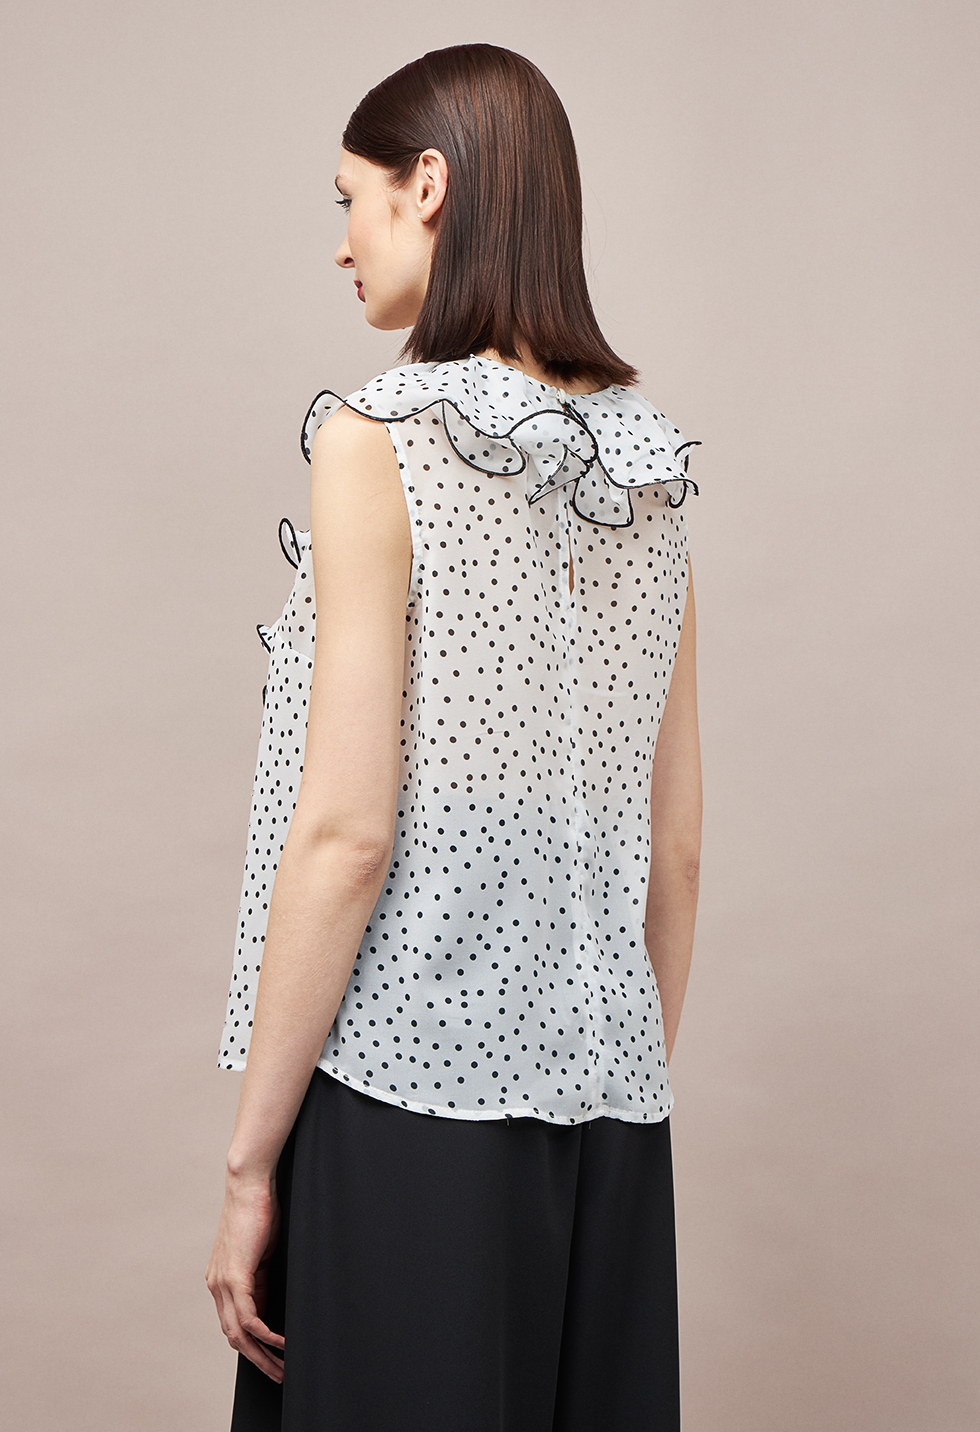 Polka dot blouse with ruffles